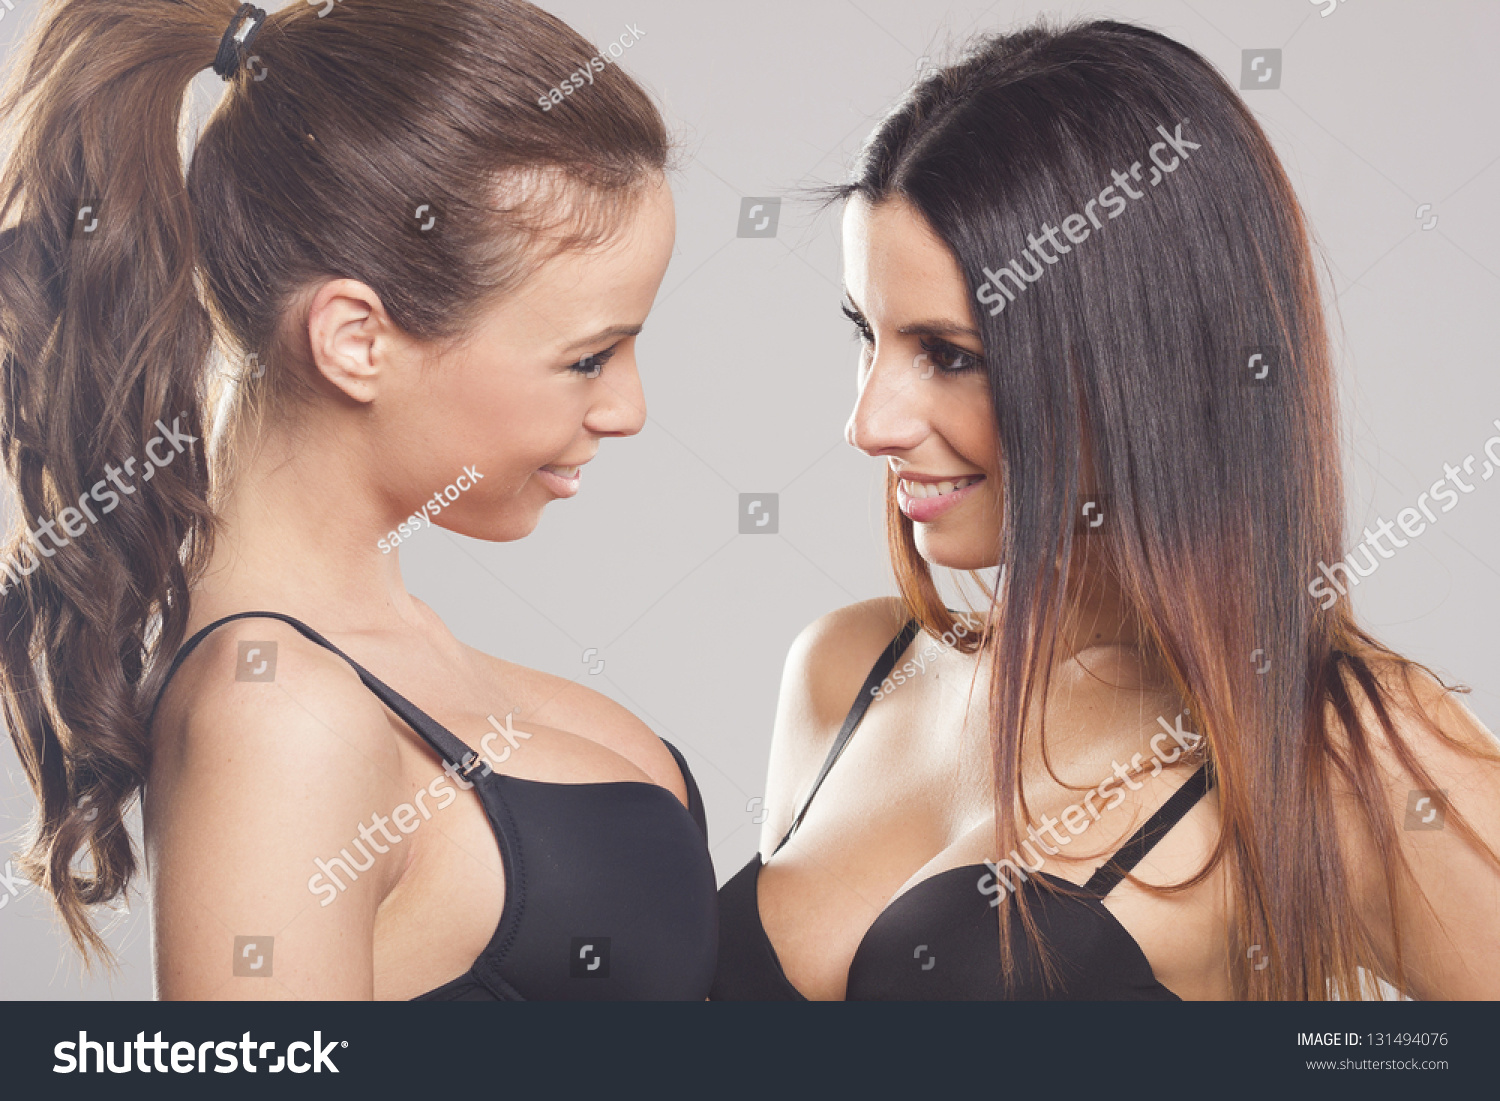 Breast lesbian bra galleries image